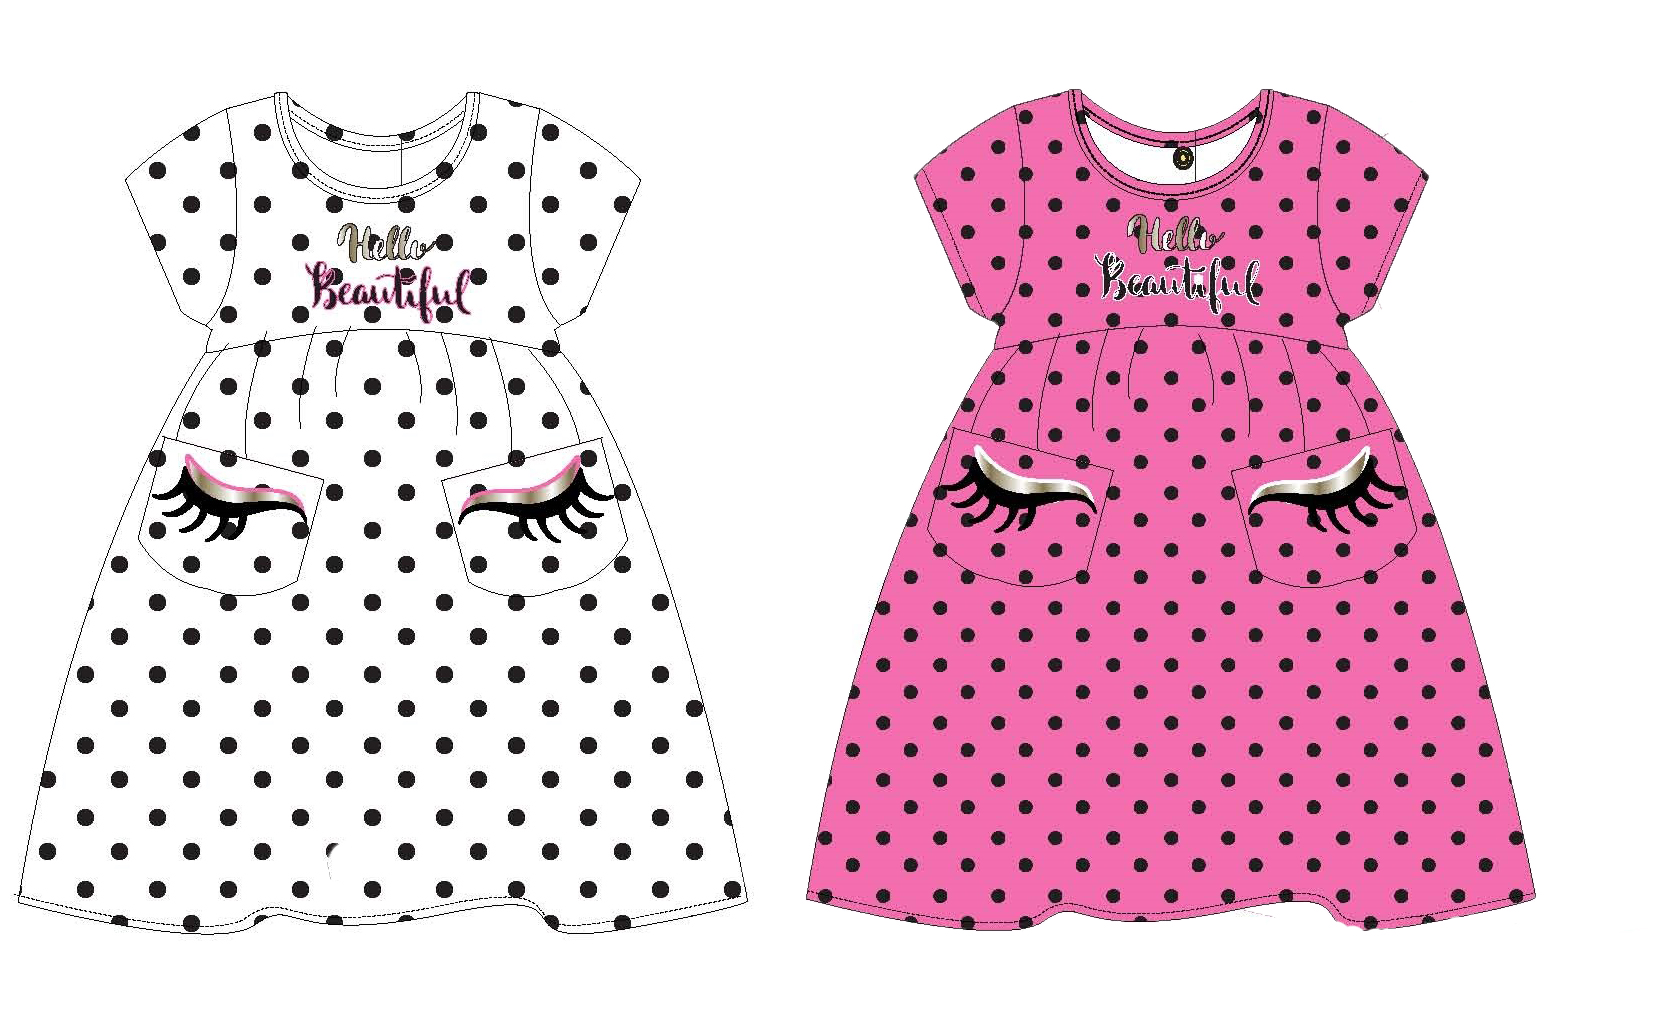 Girl's Knit Hello Beautiful Dresses w/ Polka Dots & Blush Eye-Lash Print - Sizes 4-6X